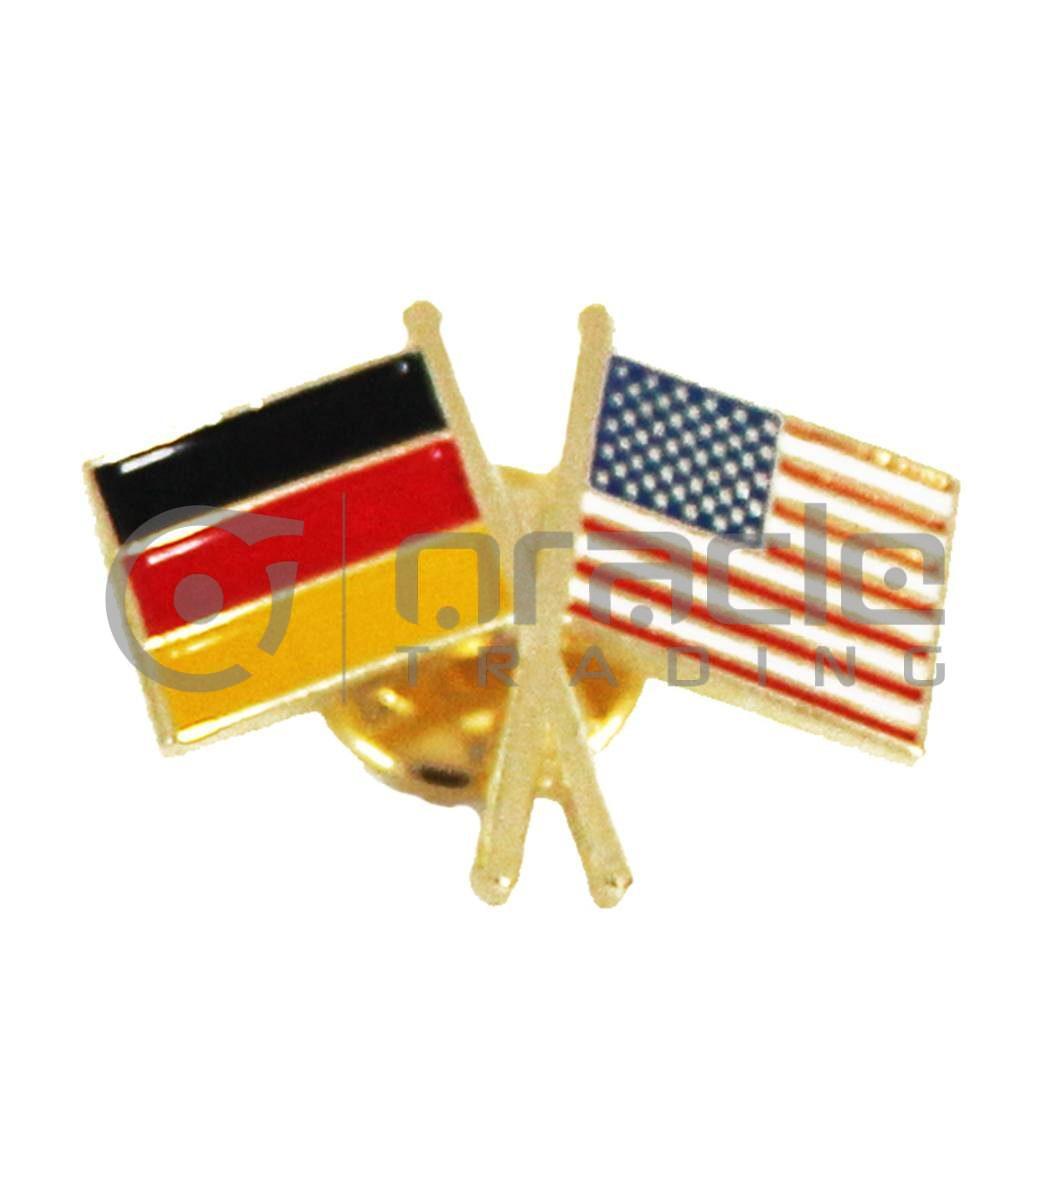 Germany / USA Friendship Lapel Pin